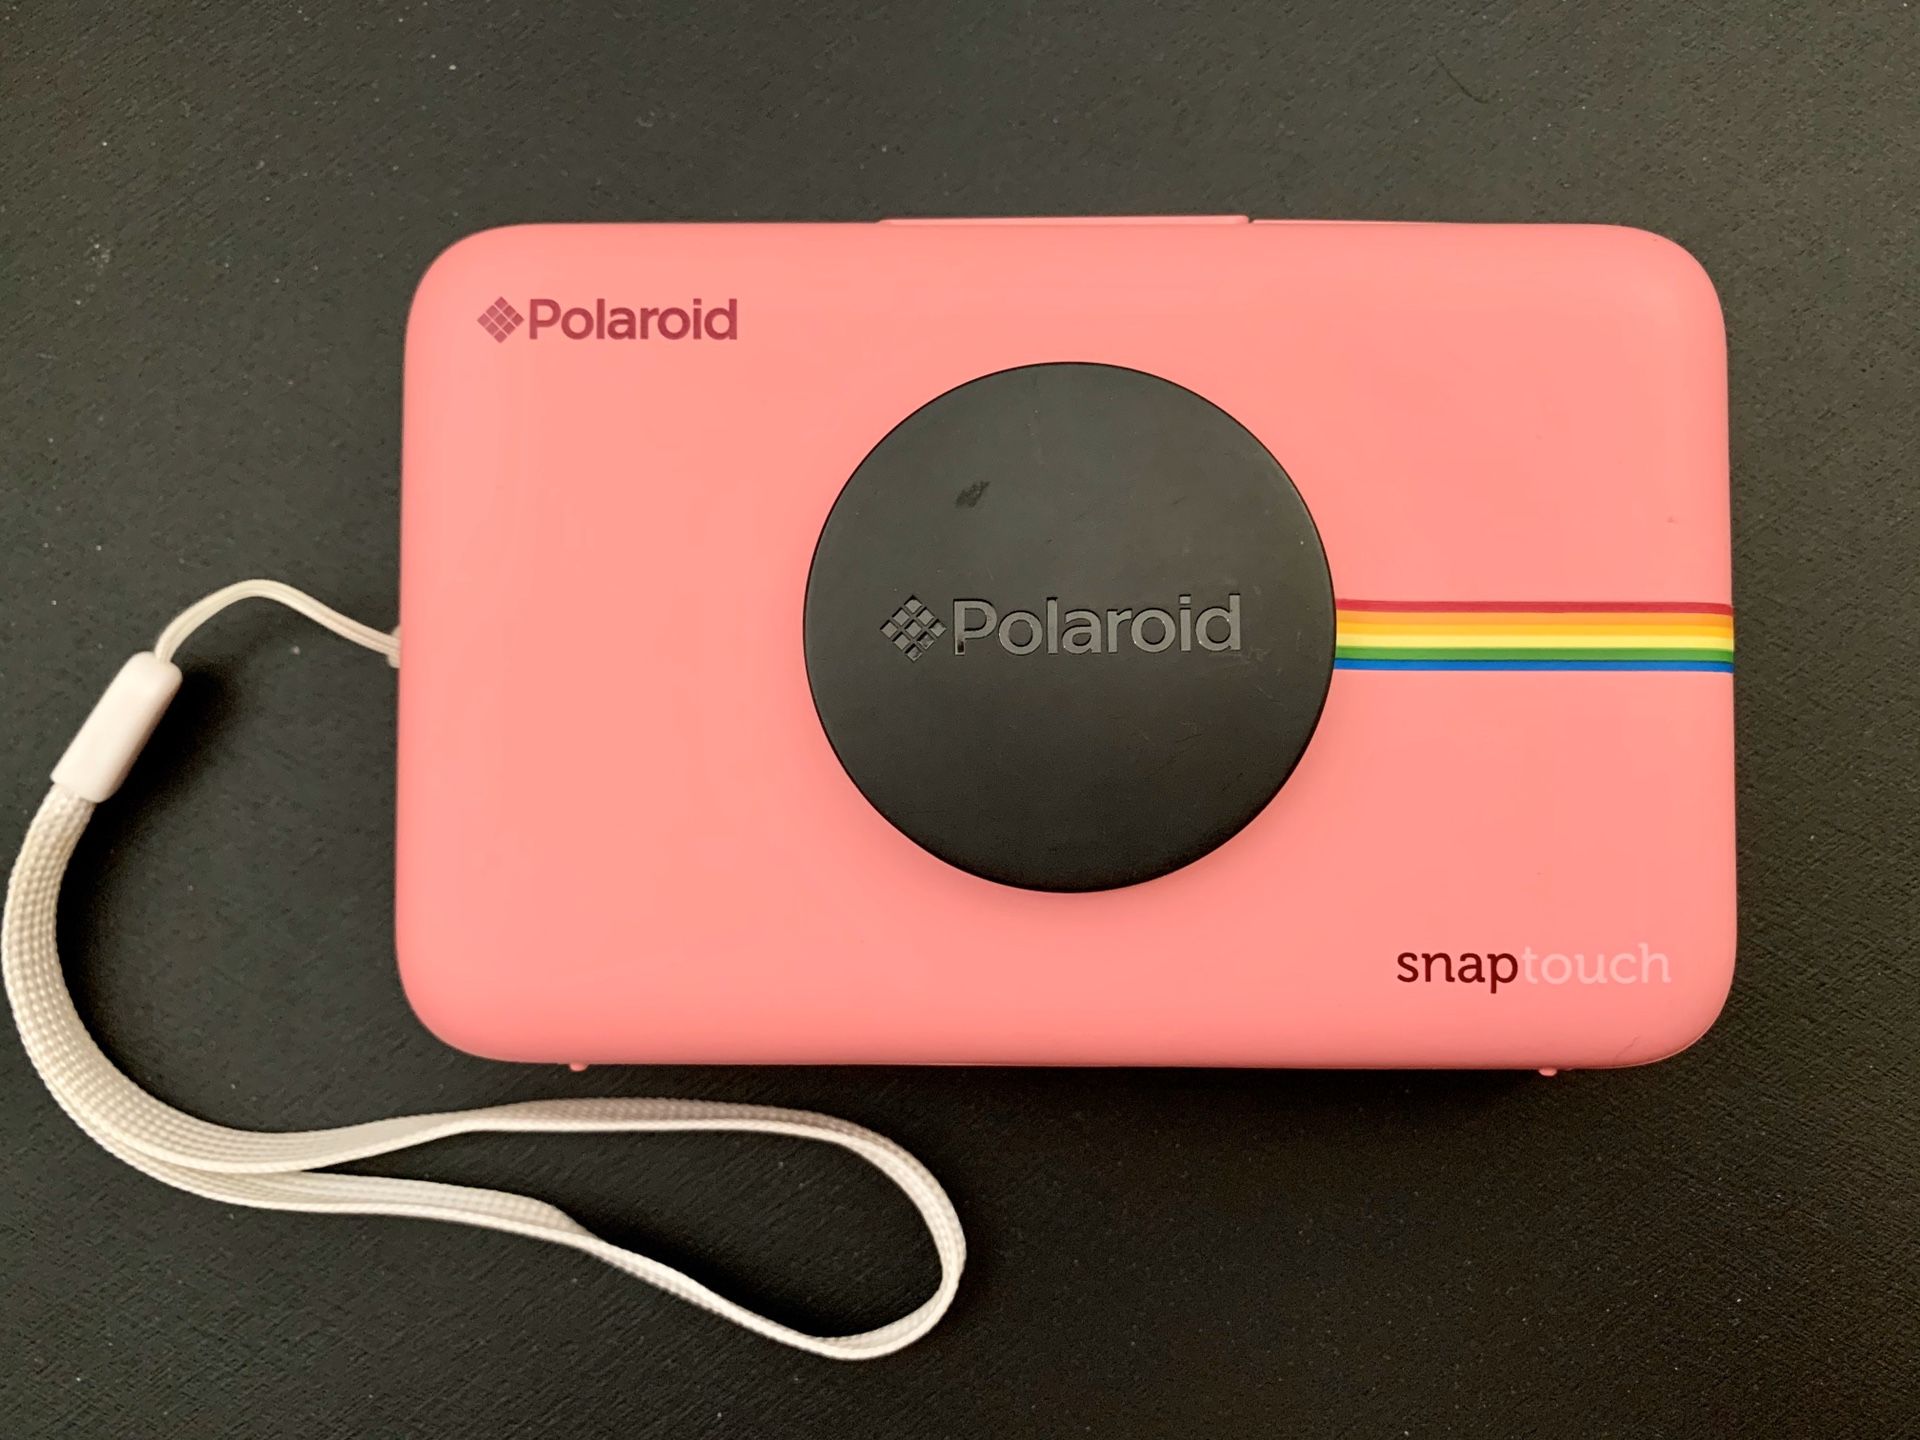 Polaroid Snap touch